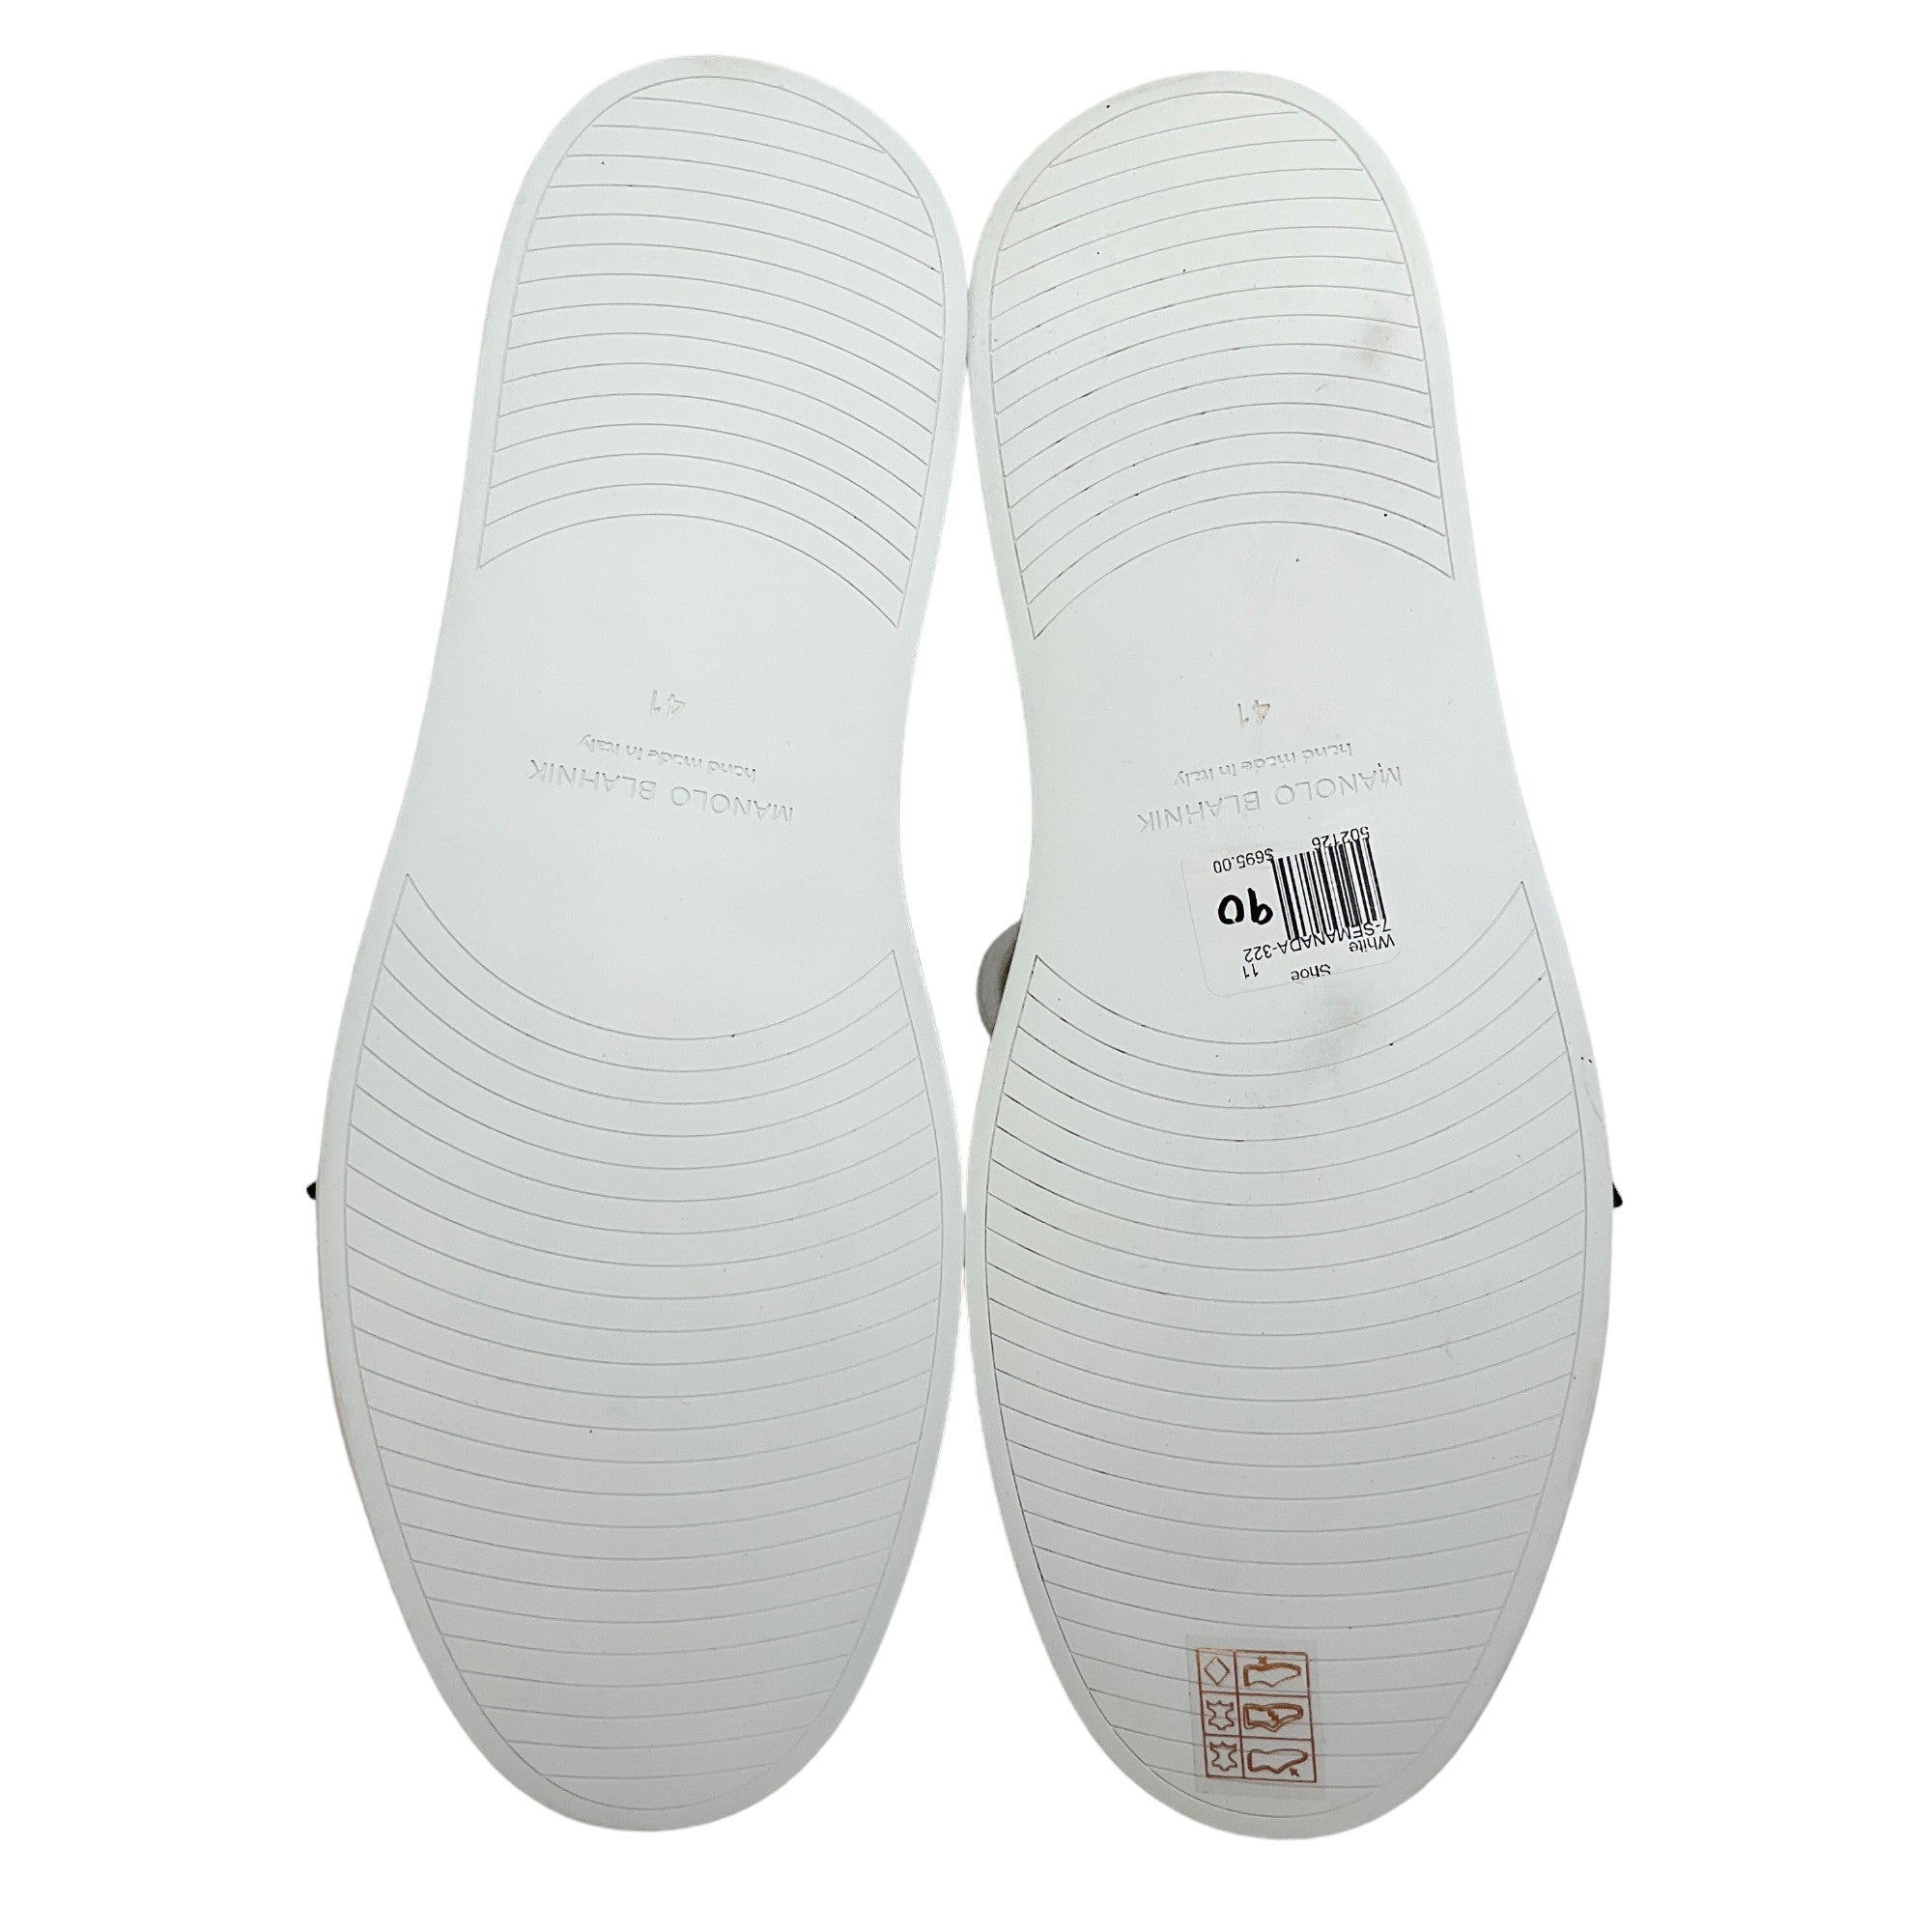 Manolo Blahnik White Leather Semanada Sneakers